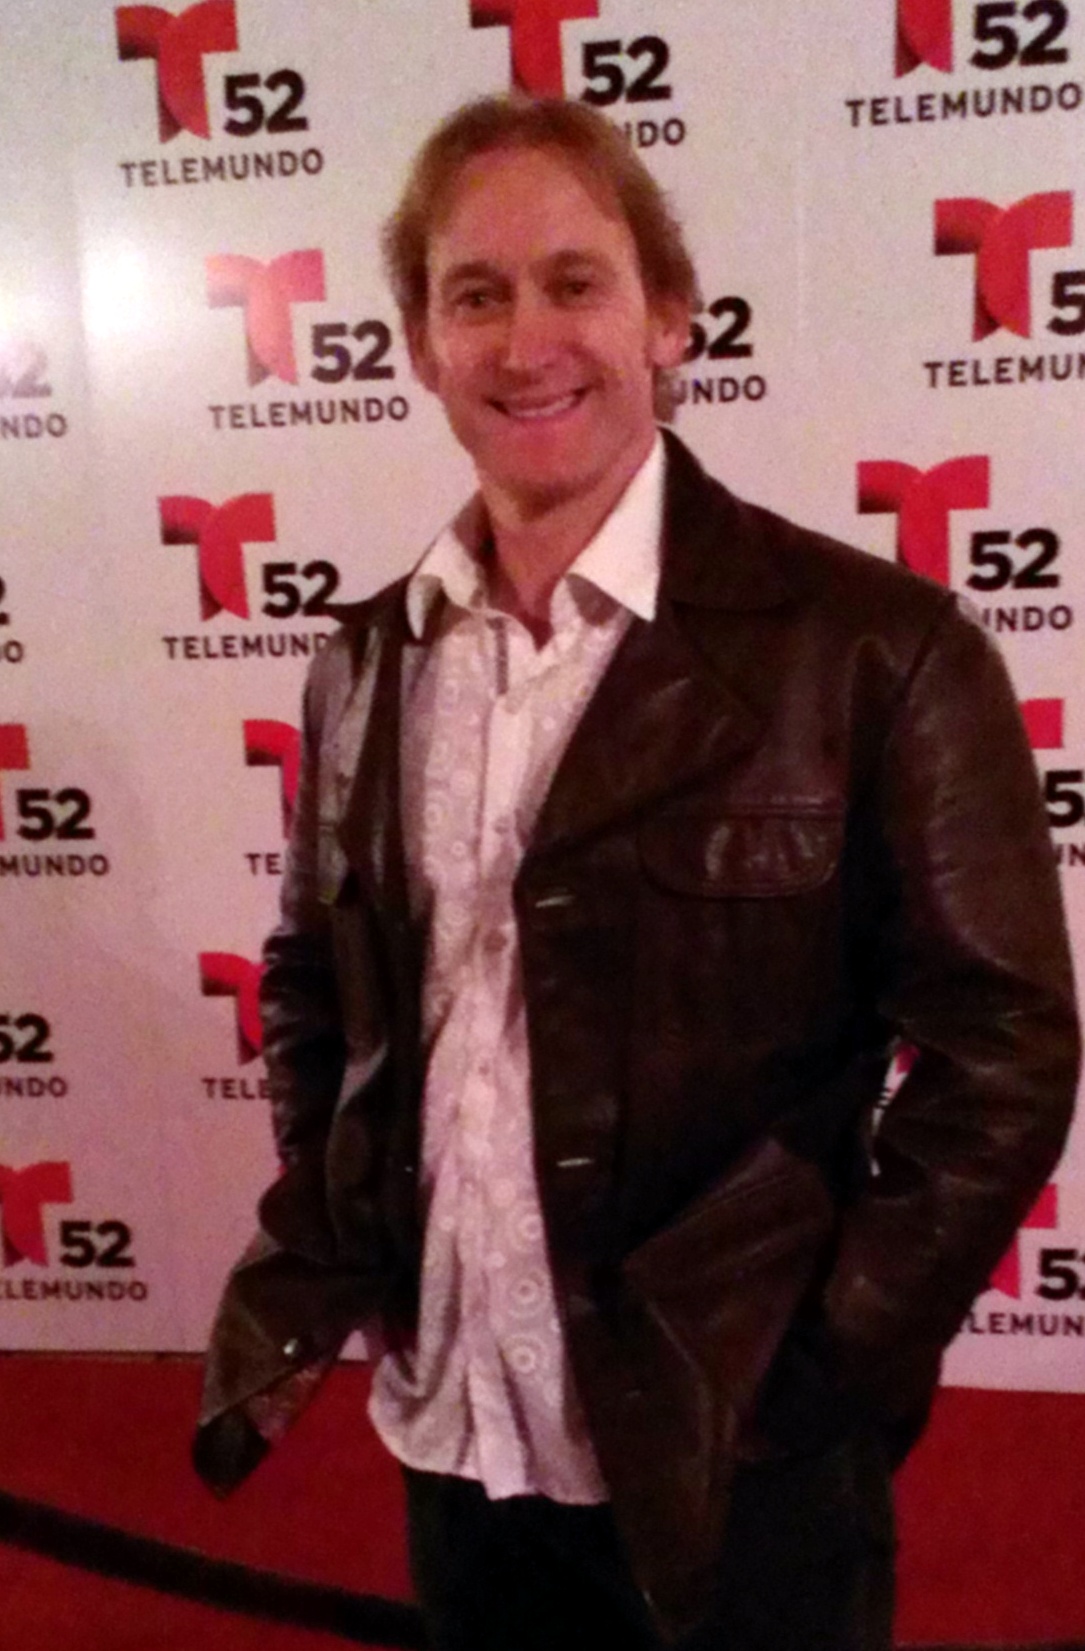 Telemundo Awards 2013